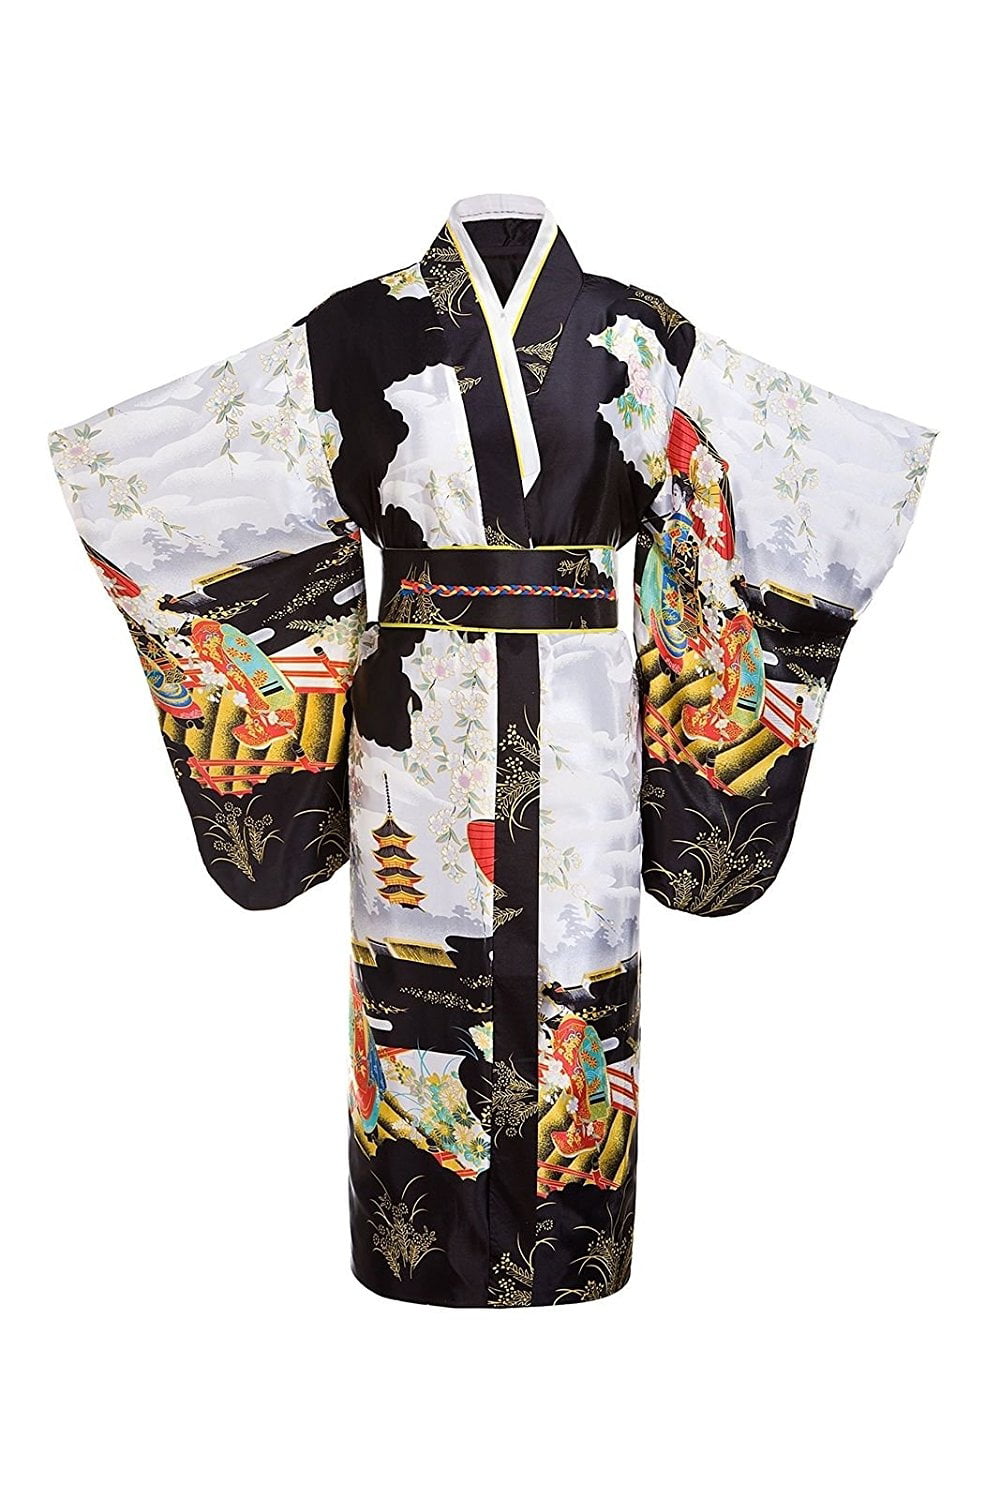 THY COLLECTIBLES Women's Silk Traditional Japanese Kimono Robe